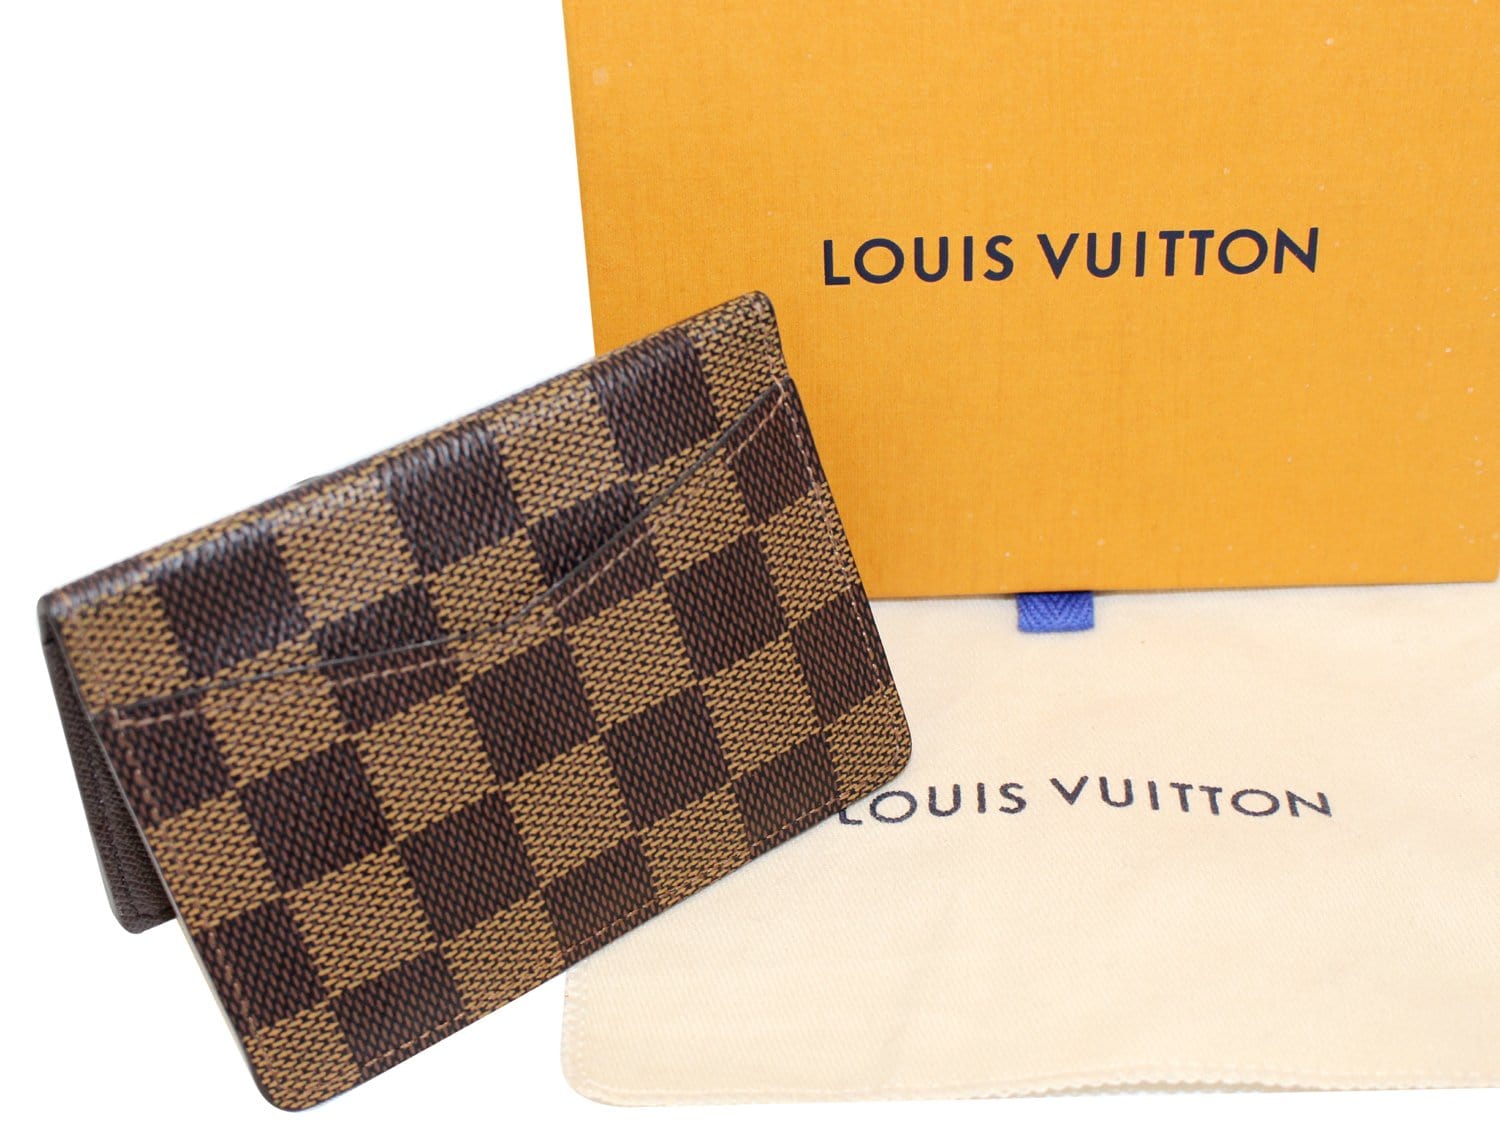 Louis Vuitton pocket organizer damier ebene MI0034